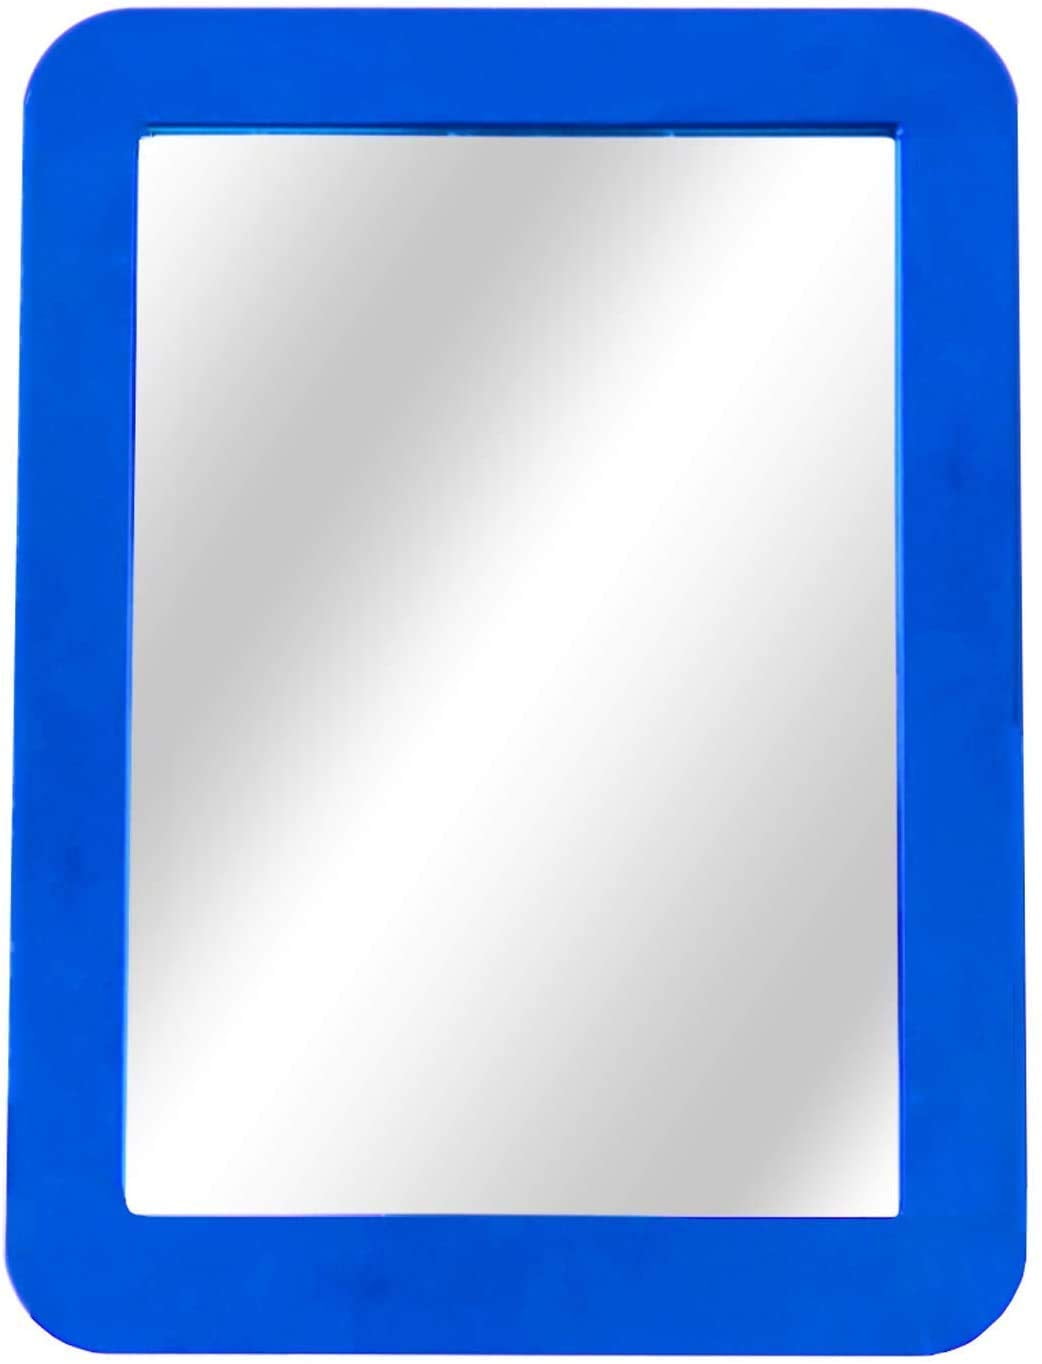 Bazic Magnetic Locker Mirror